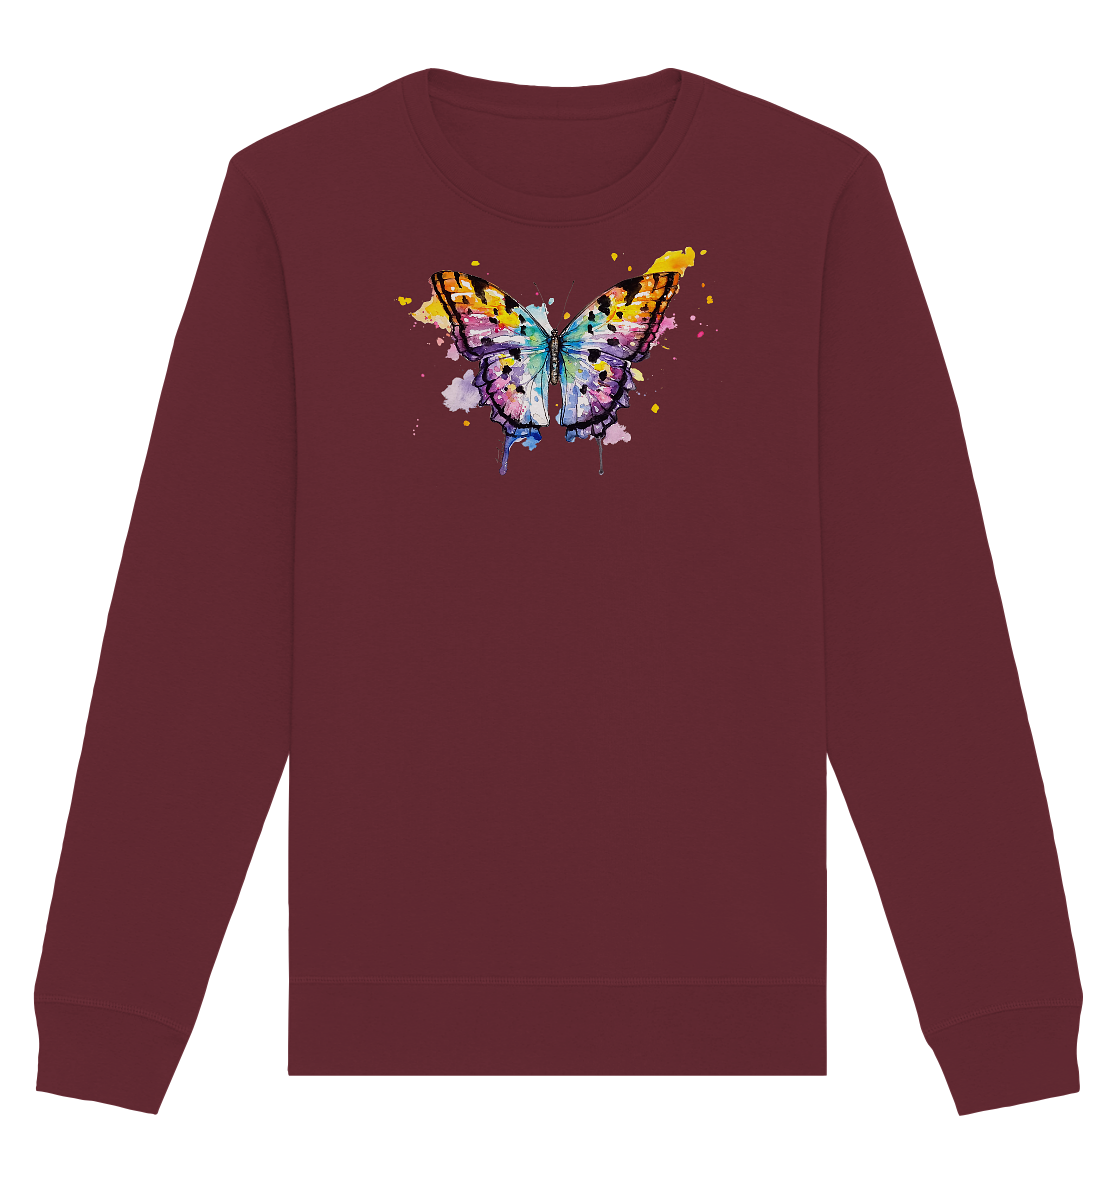 Bunter Schmetterling - Organic Basic Unisex Sweatshirt